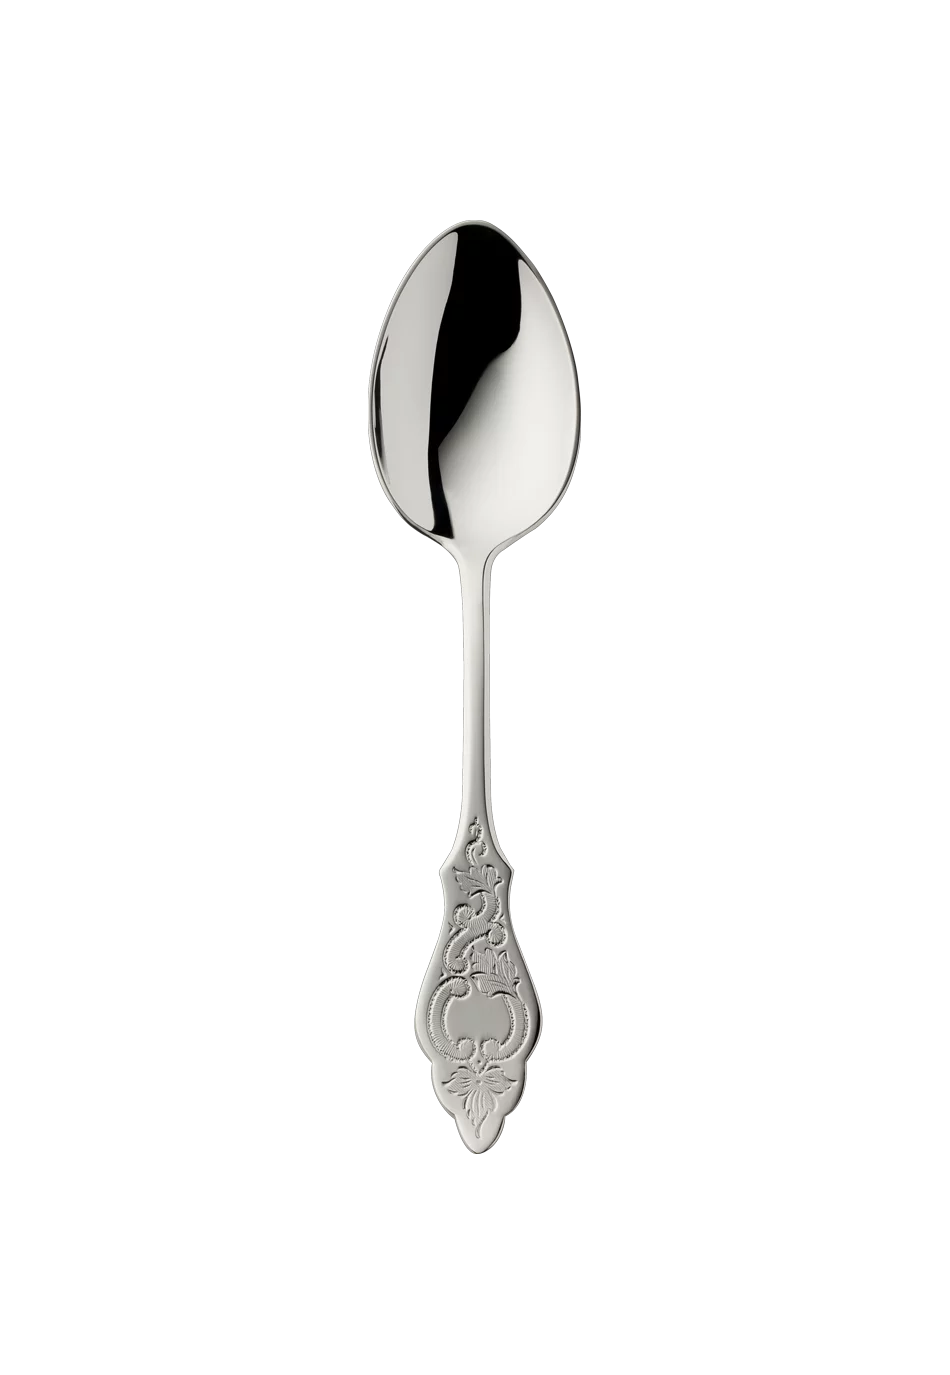 Ostfriesen Menu Spoon (150g massive silverplated)